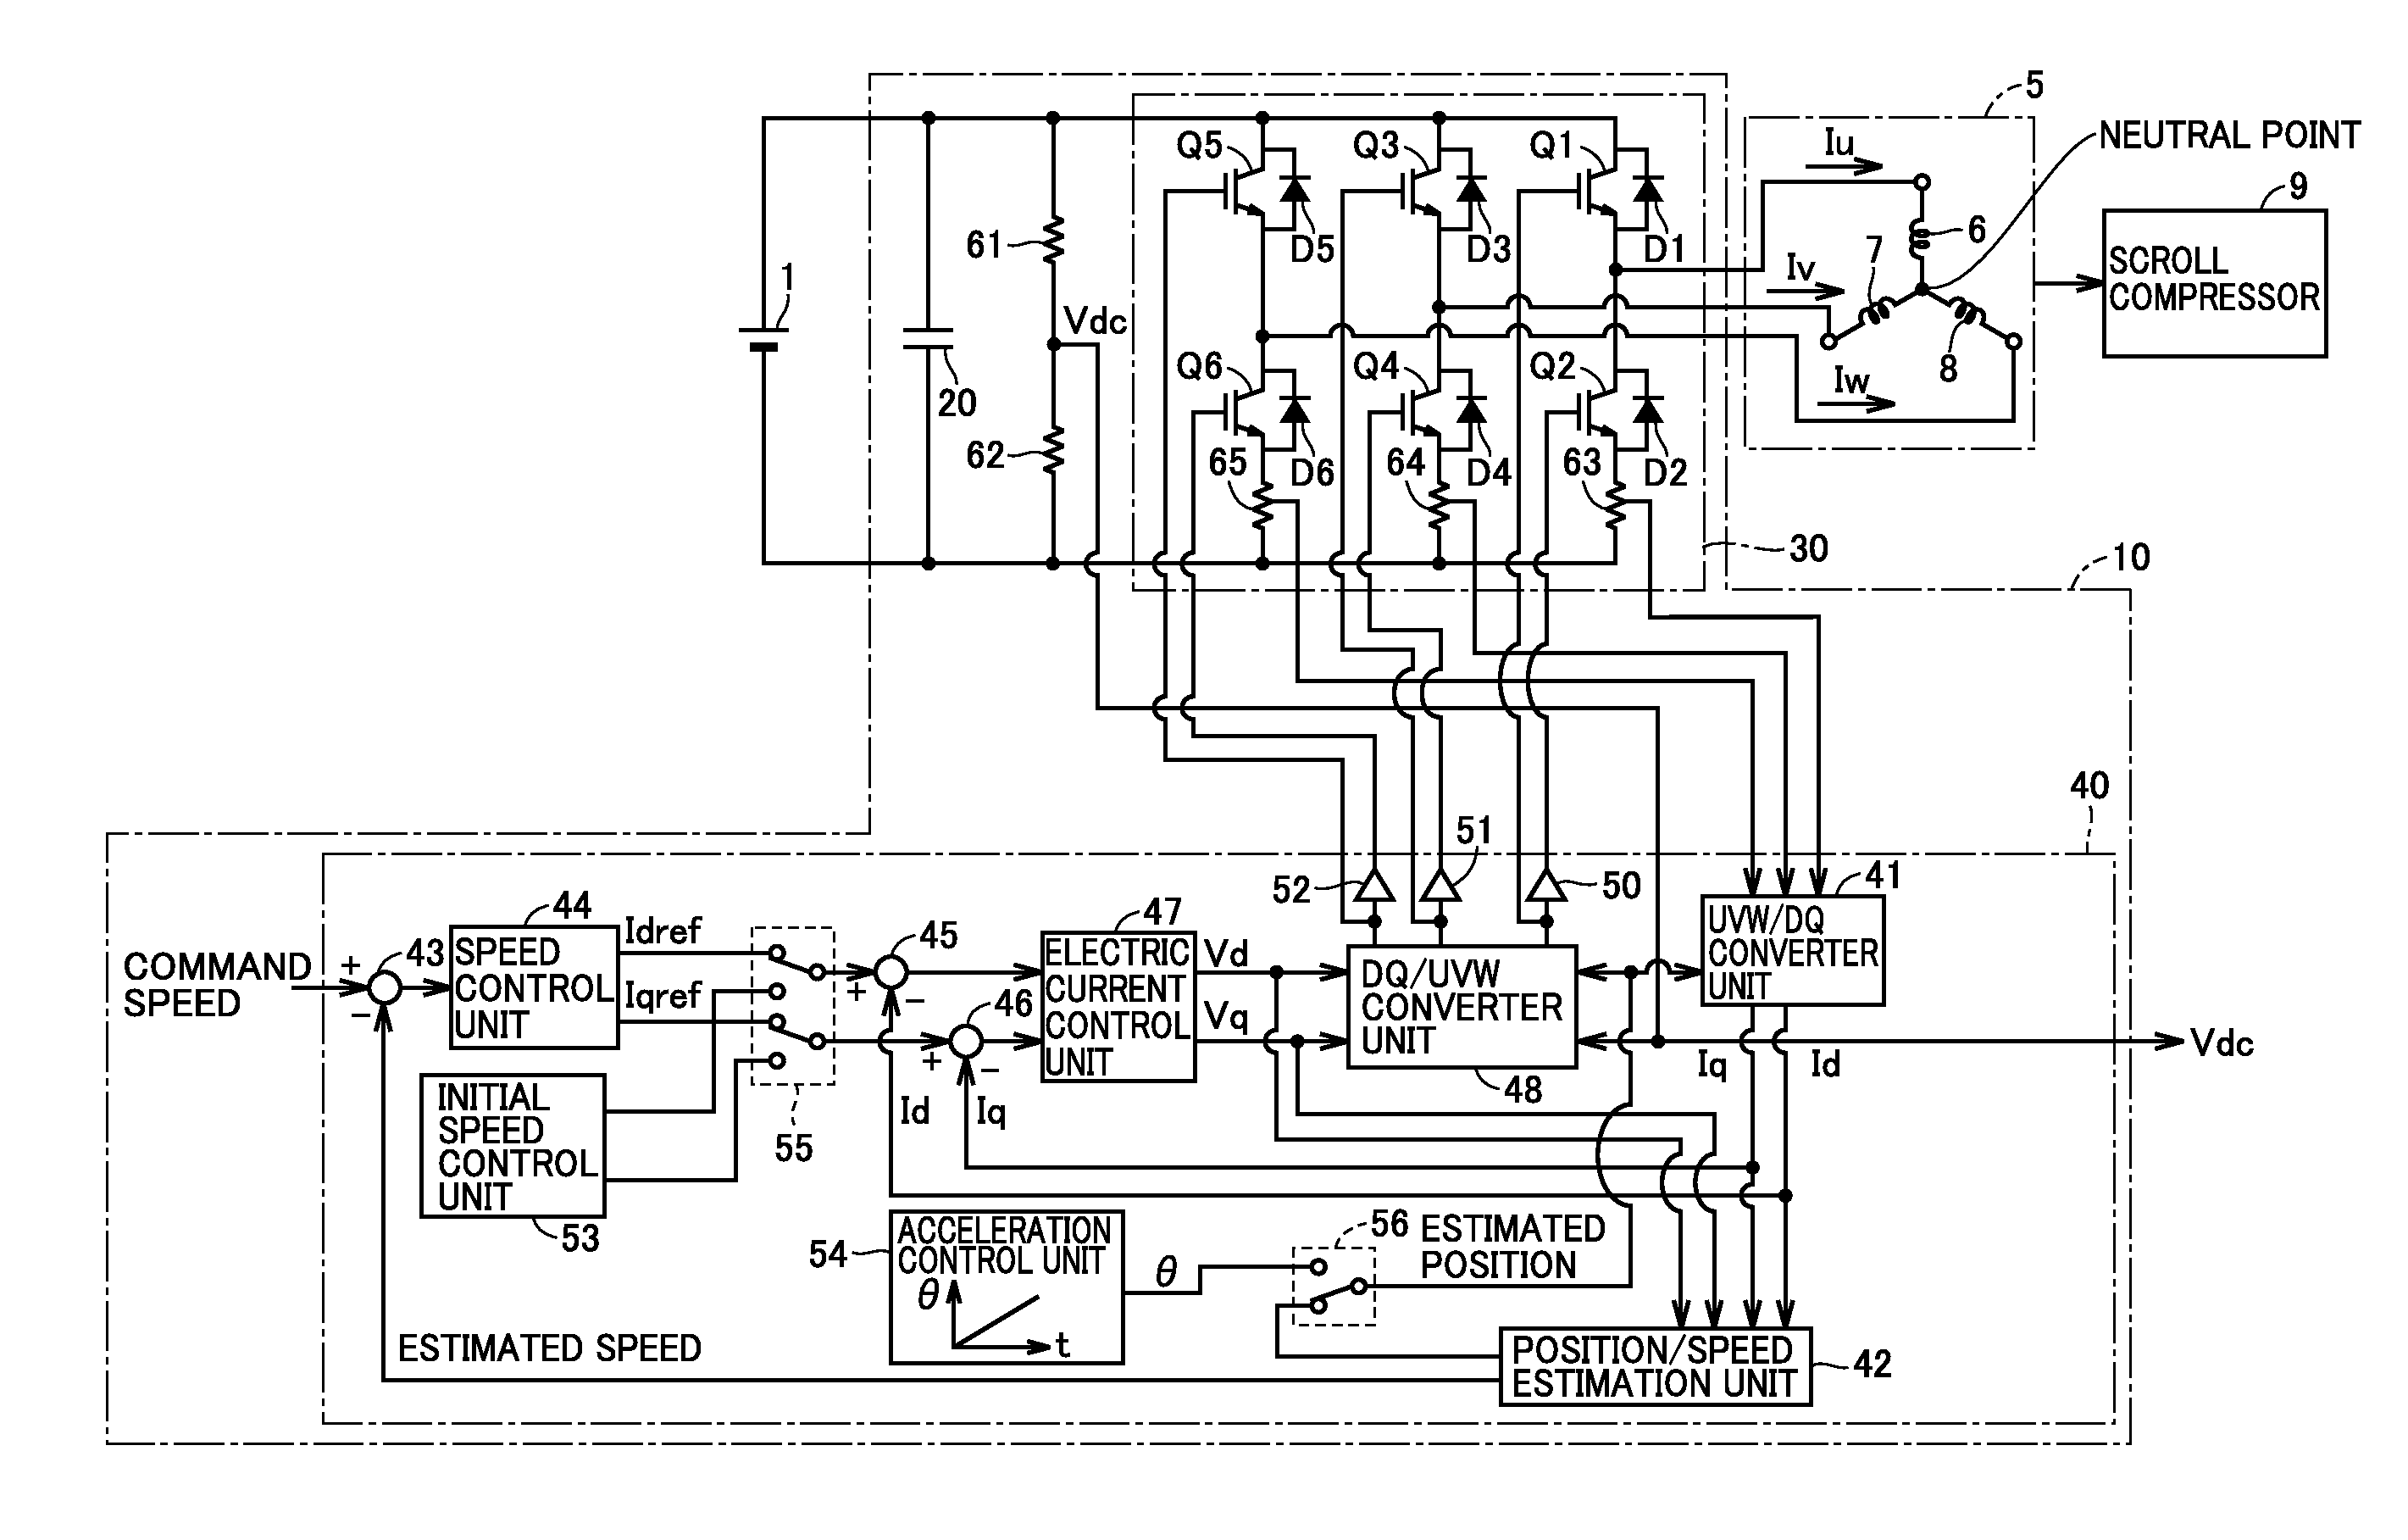 Electric compressor